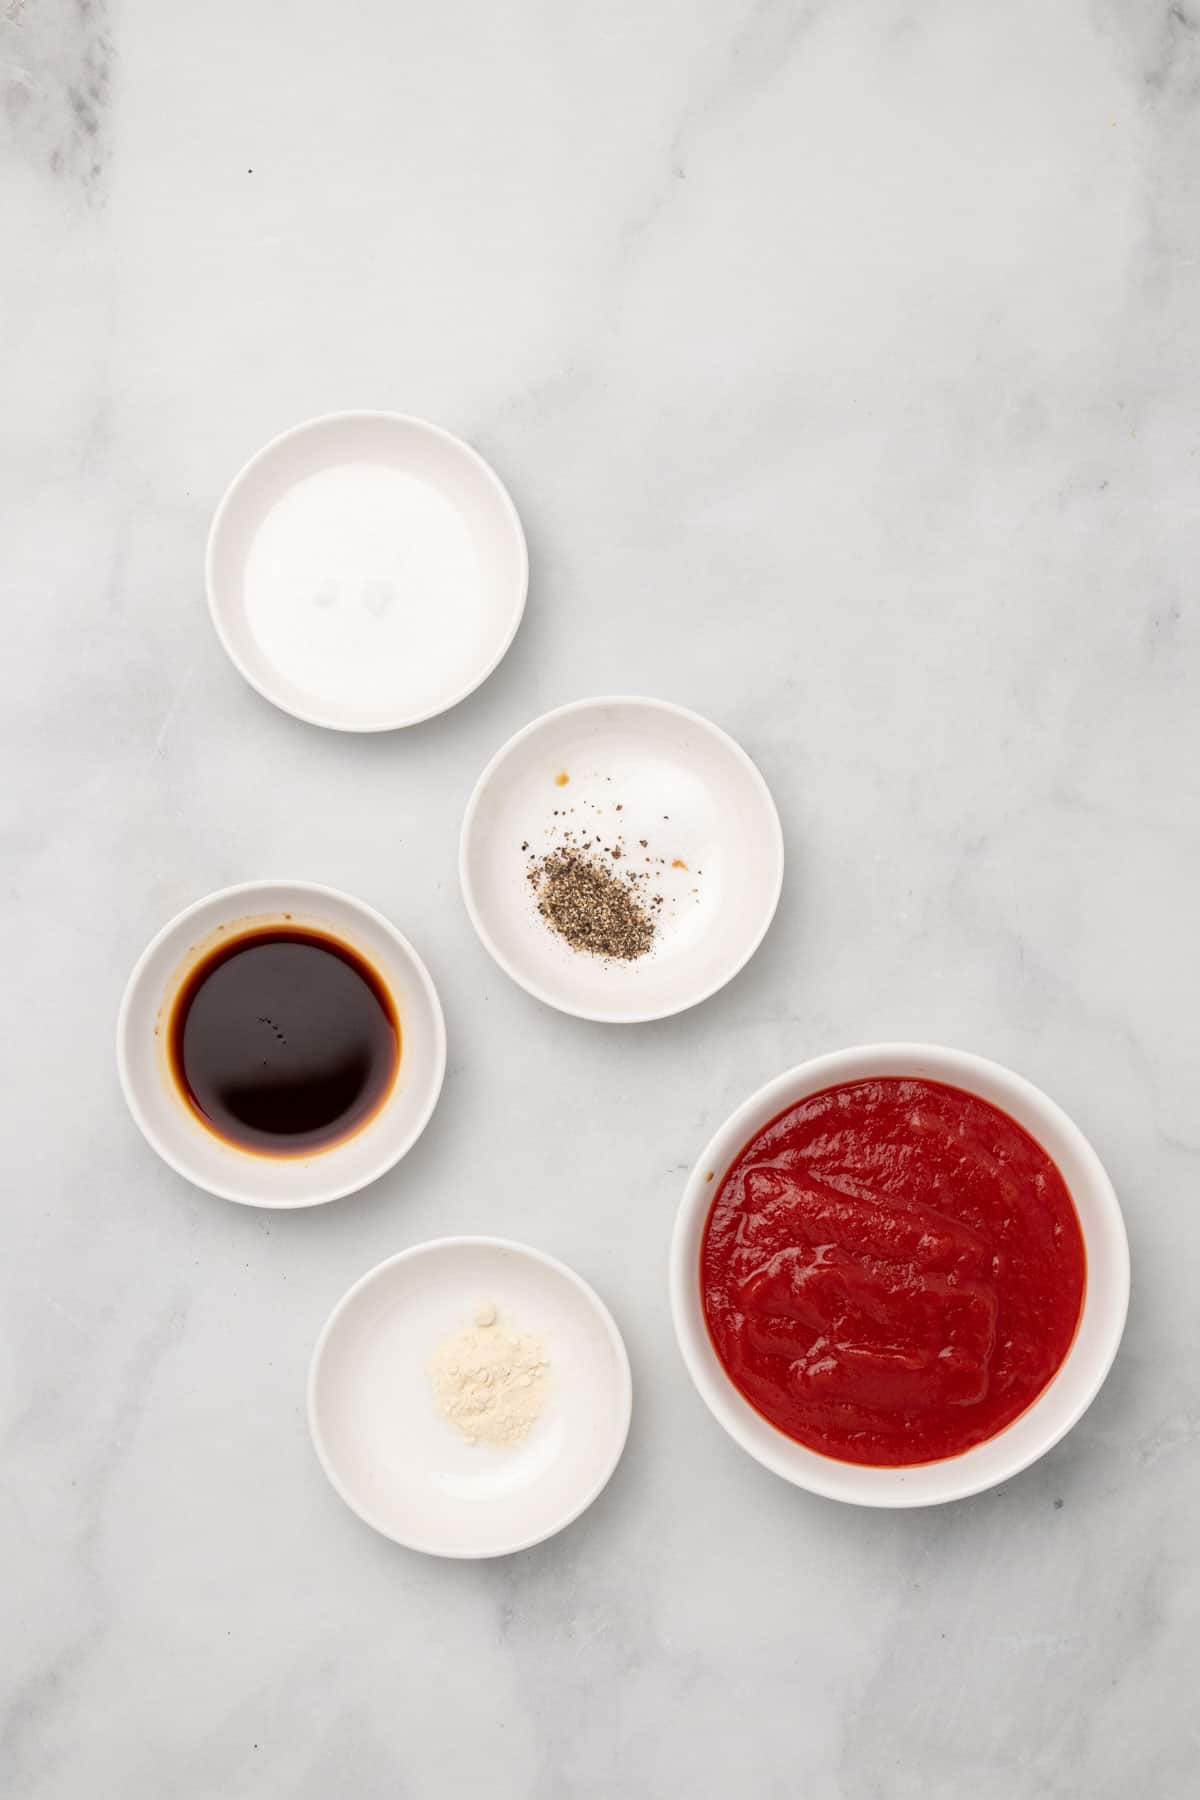 Ingredients for tomato glaze in separate ramekins